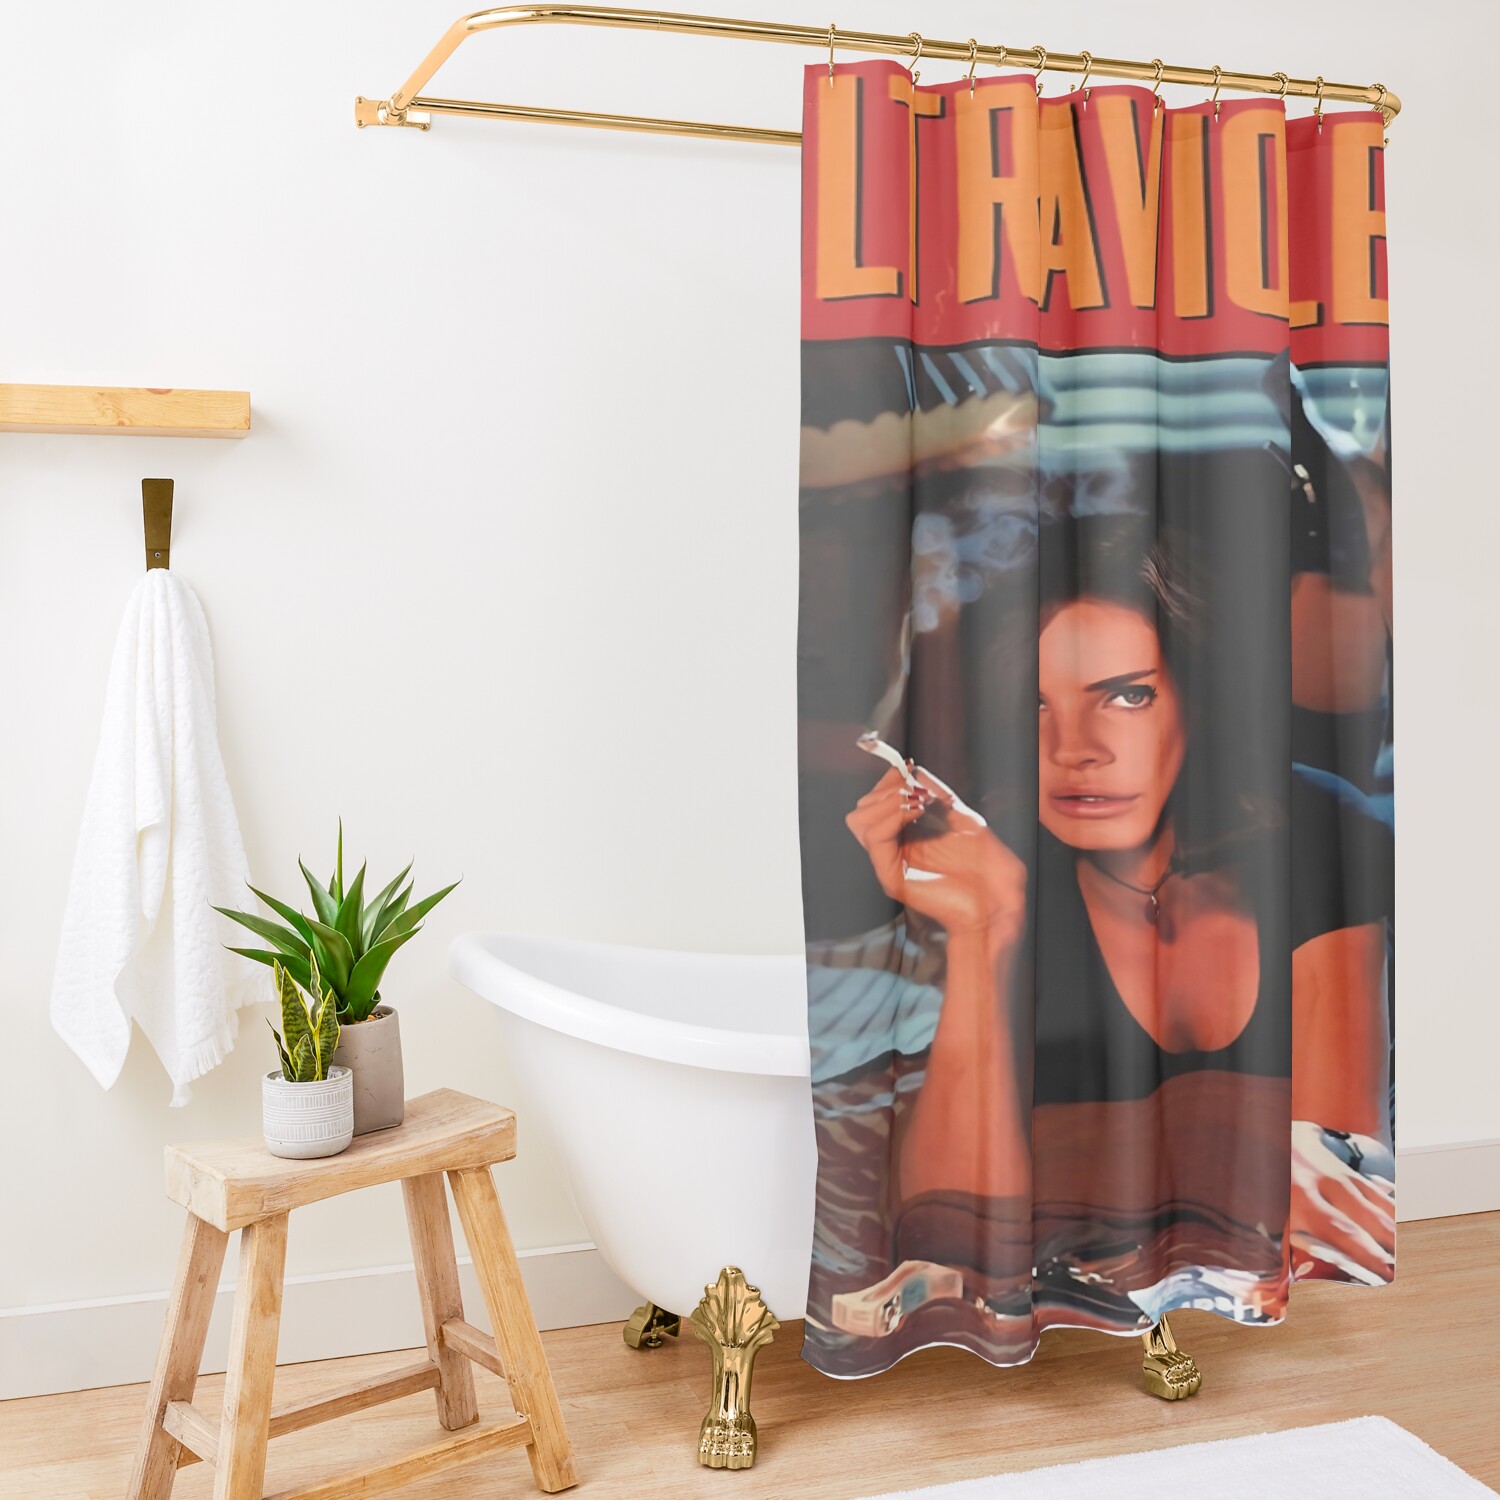 urshower curtain opensquare1500x1500 9 - Lana Del Rey Merch